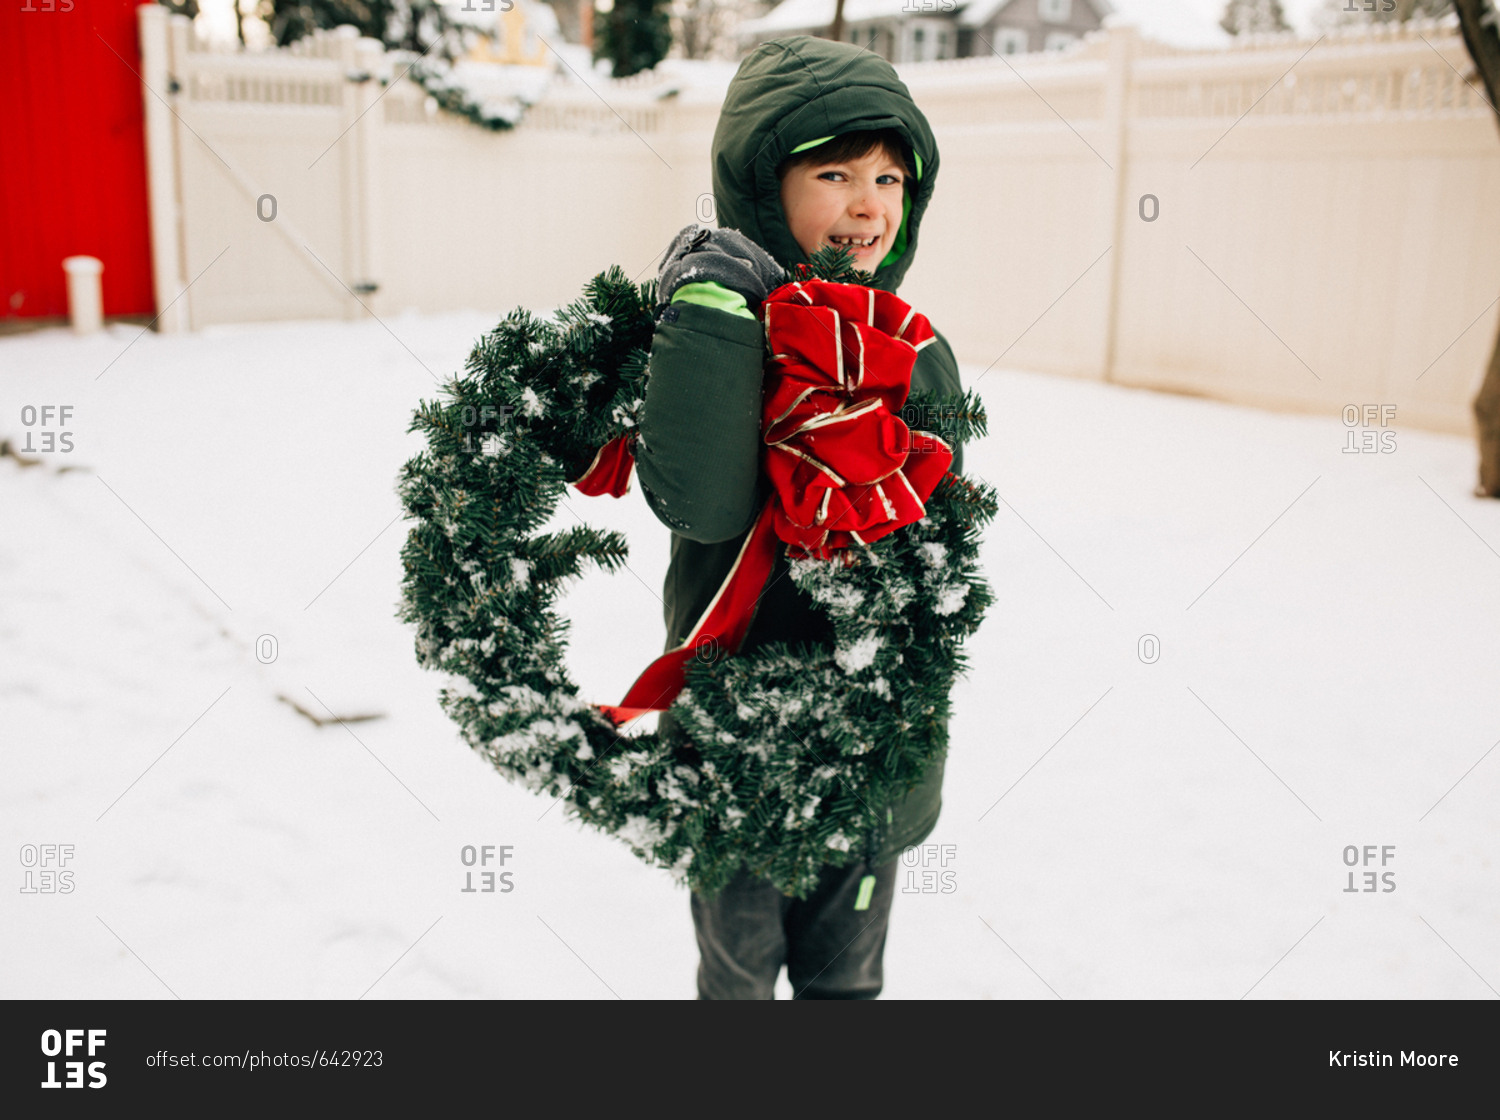 Kid carries Christmas wreath through snow